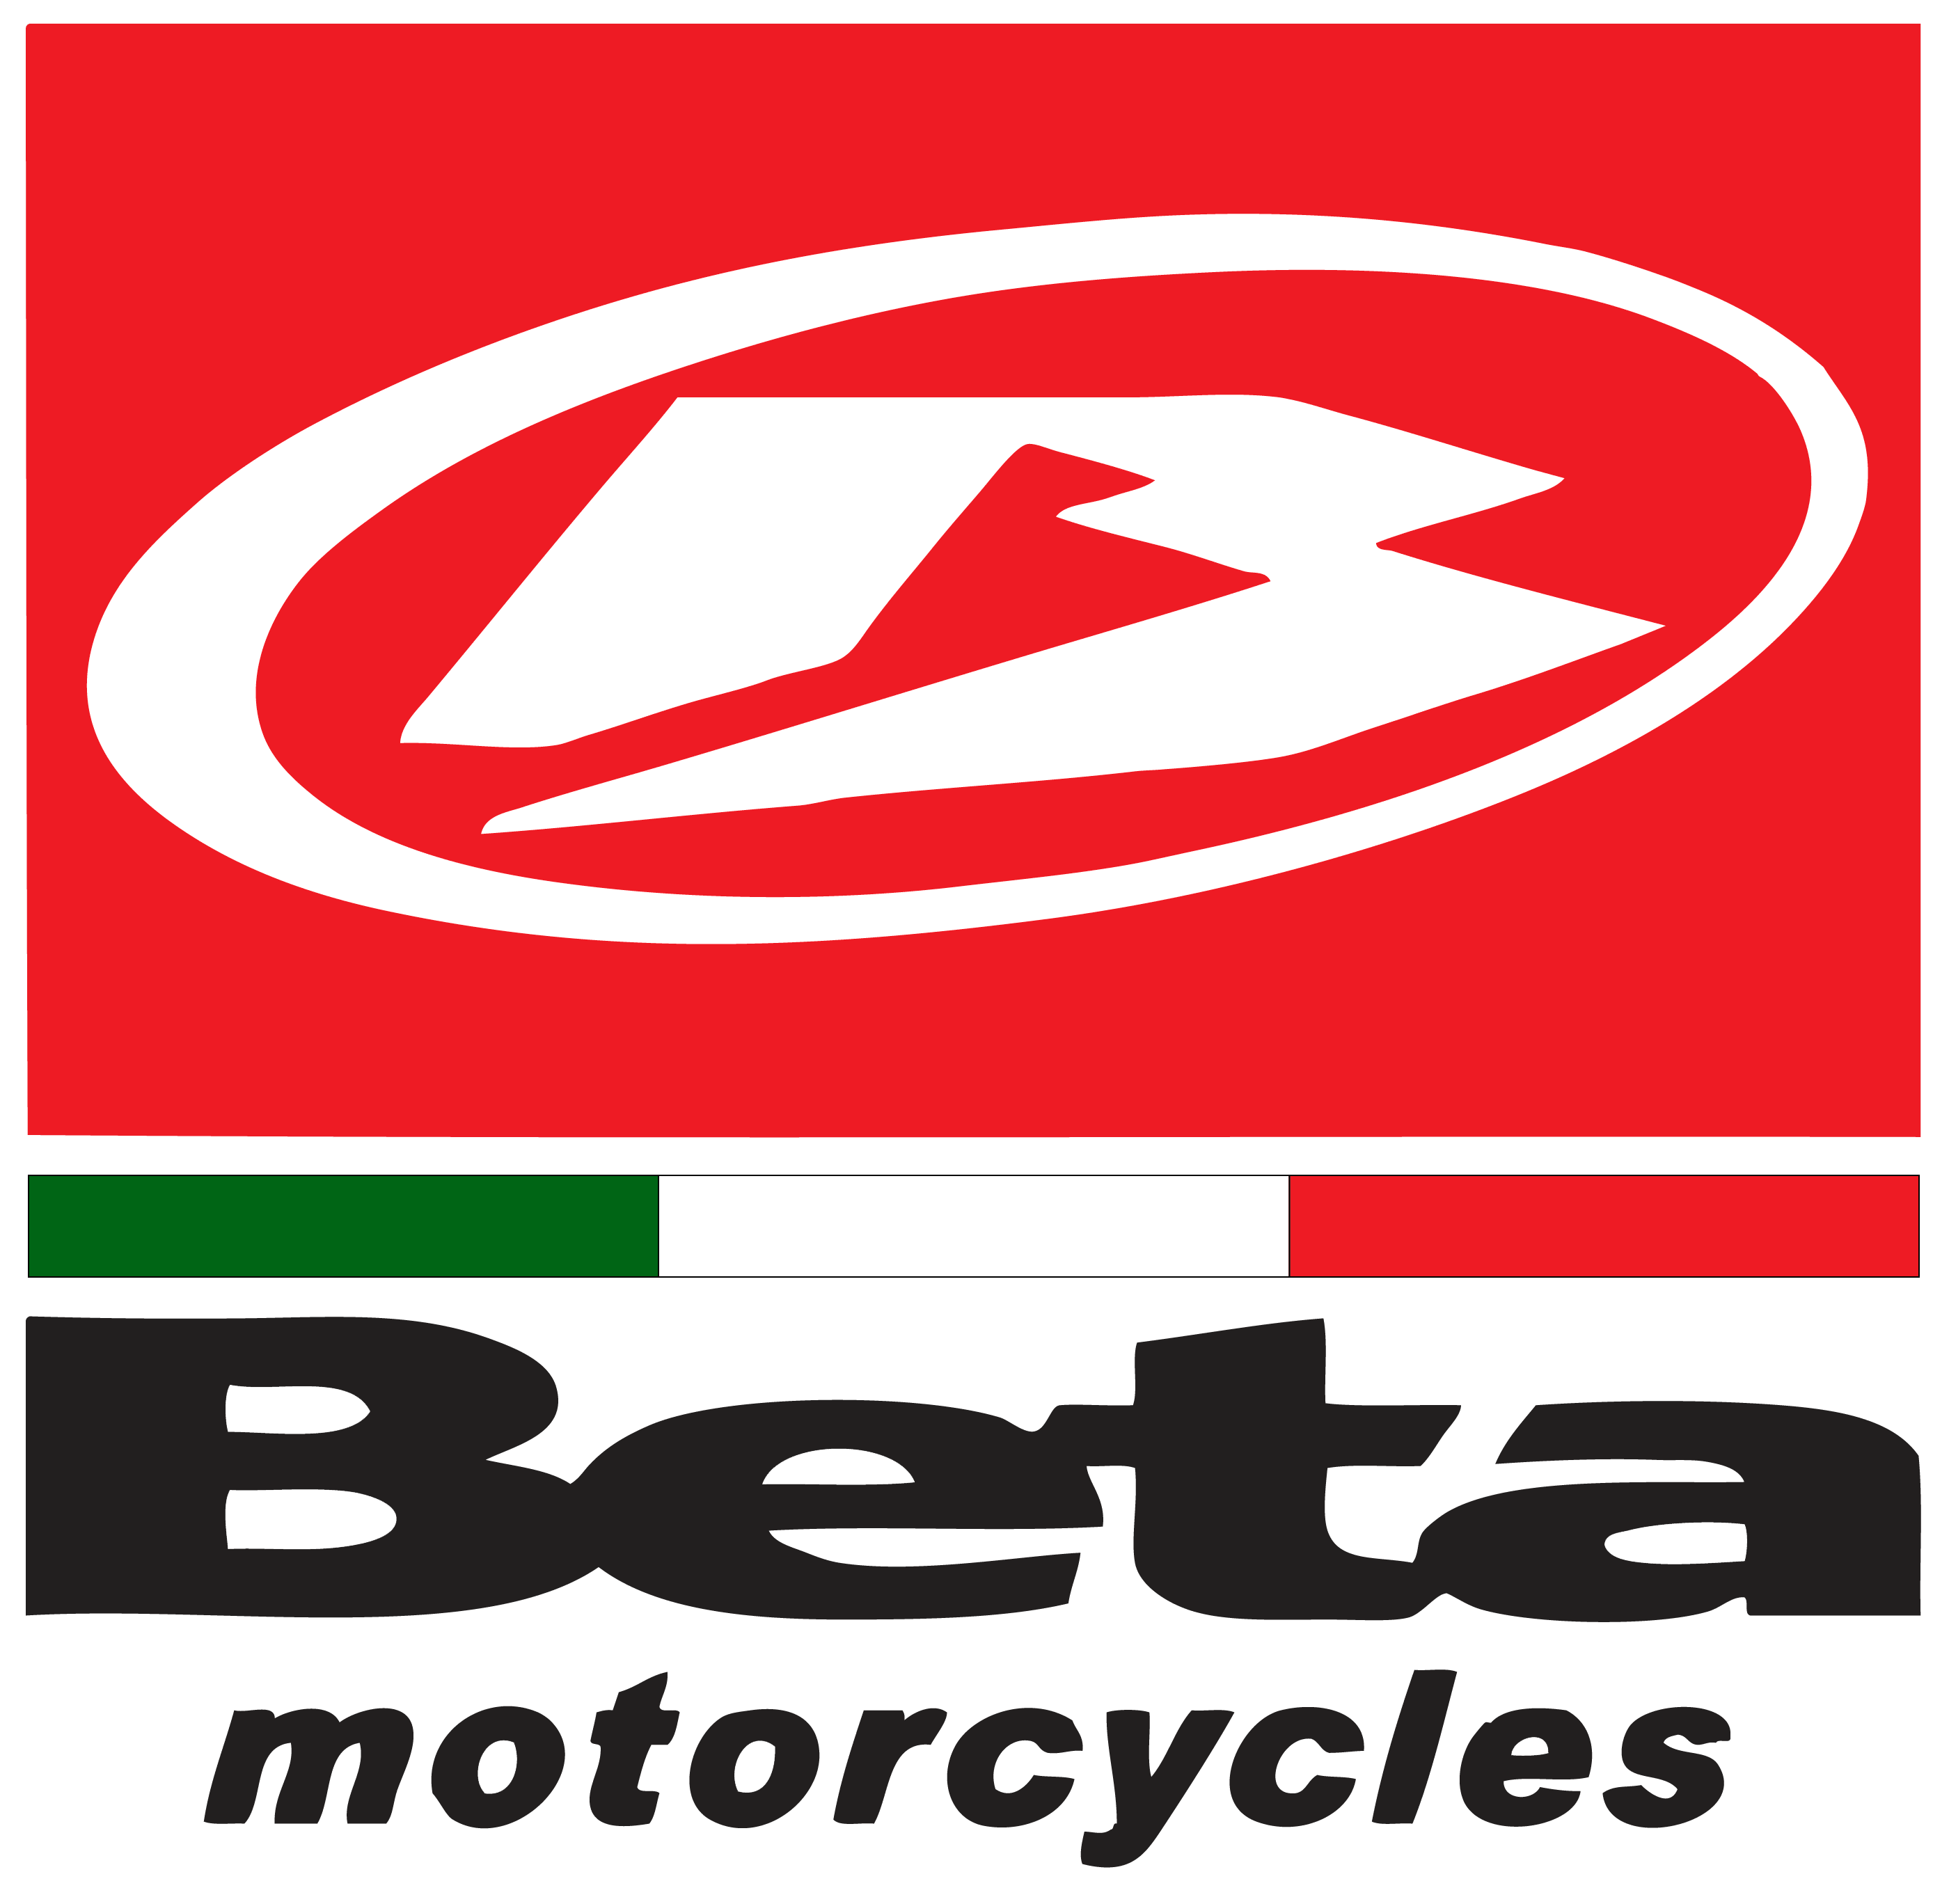 Beta Motorcycles